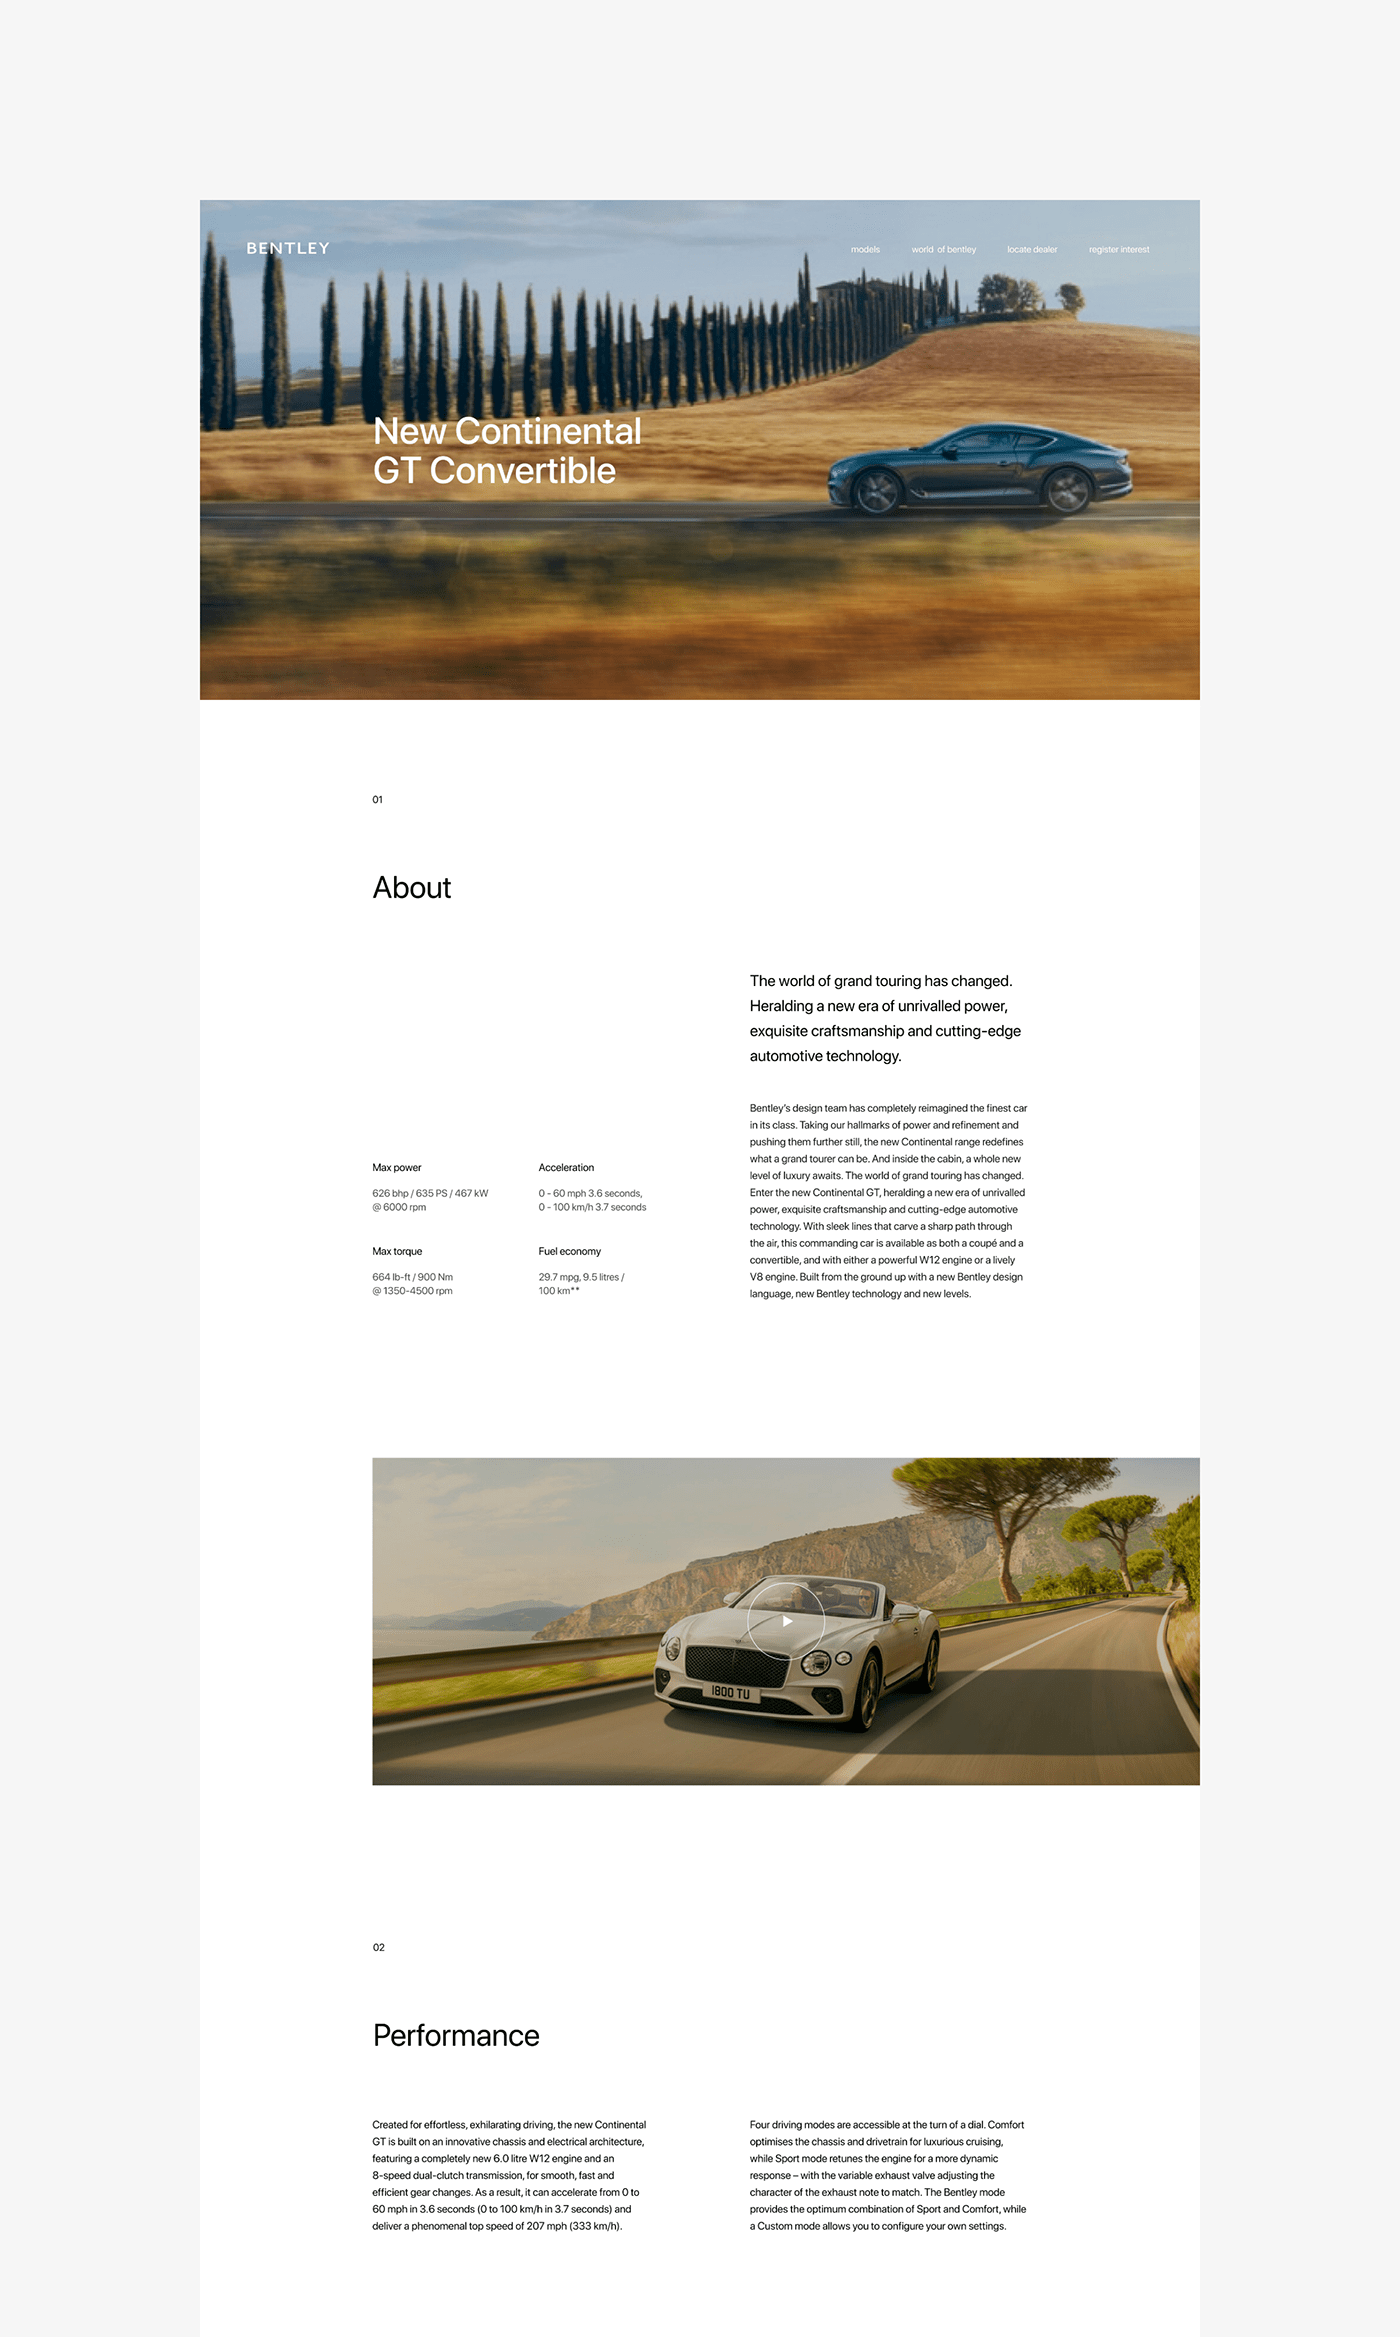 redesign Webdesign UI ux Web mobile minimal clean car luxury